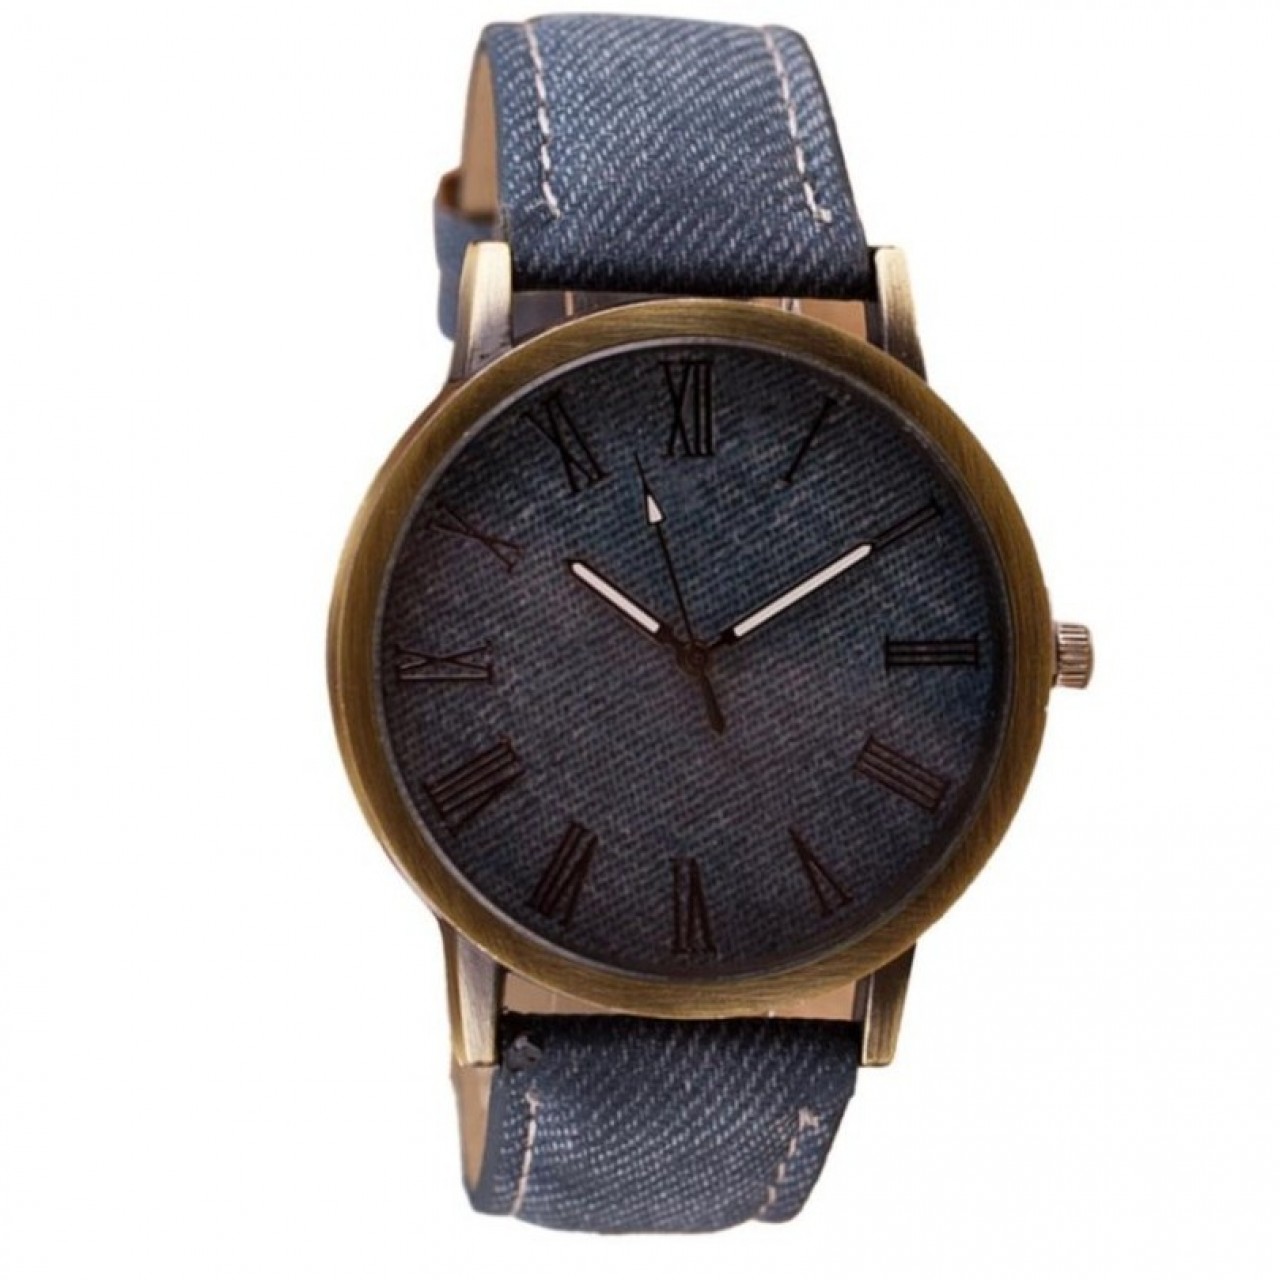 Retro Vogue Men Wrist Watch Cowboy Leather Band Analog Quartz Watch - Blue